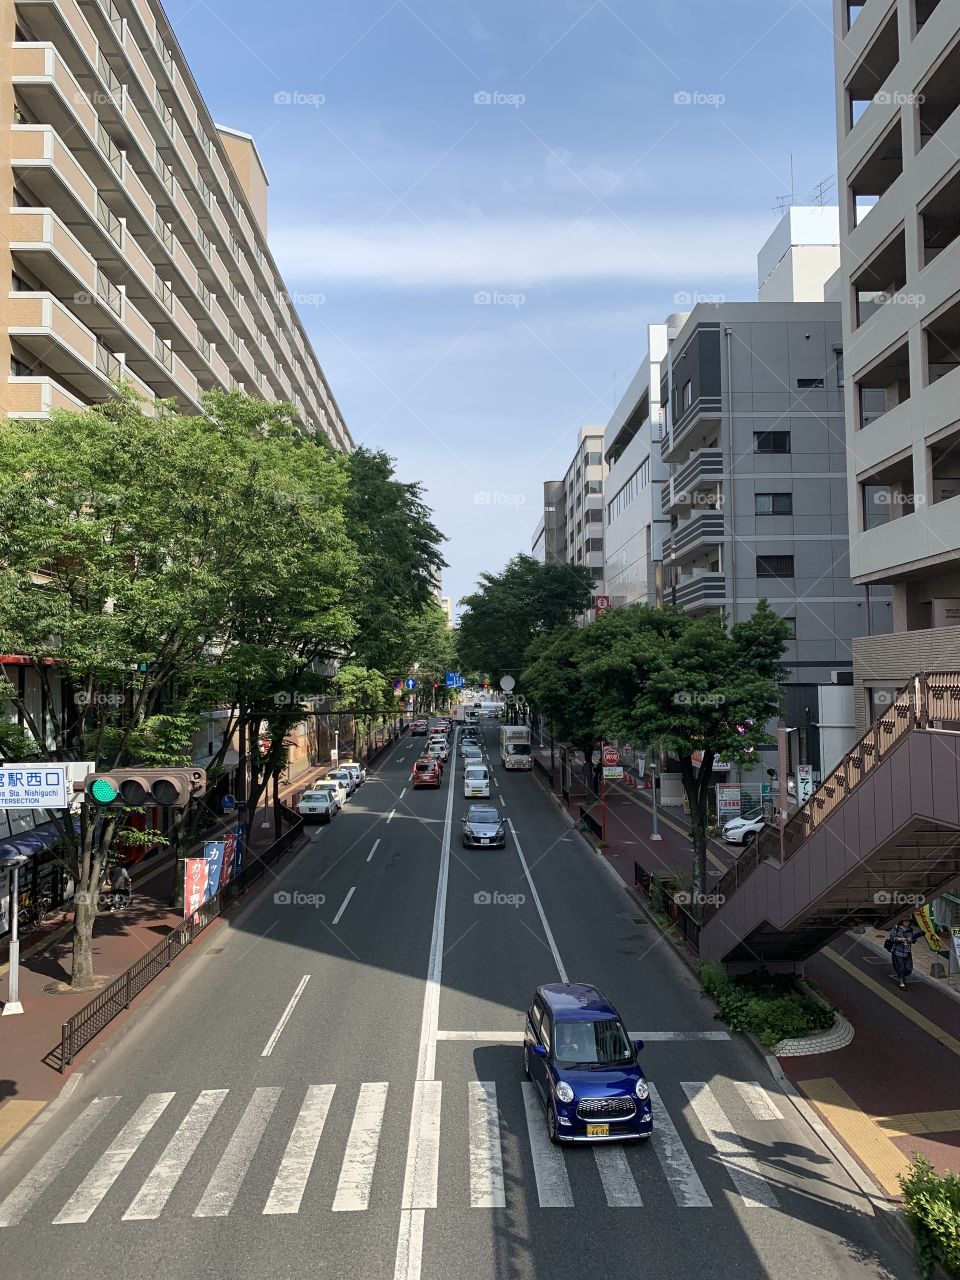 Japan street with nice trees